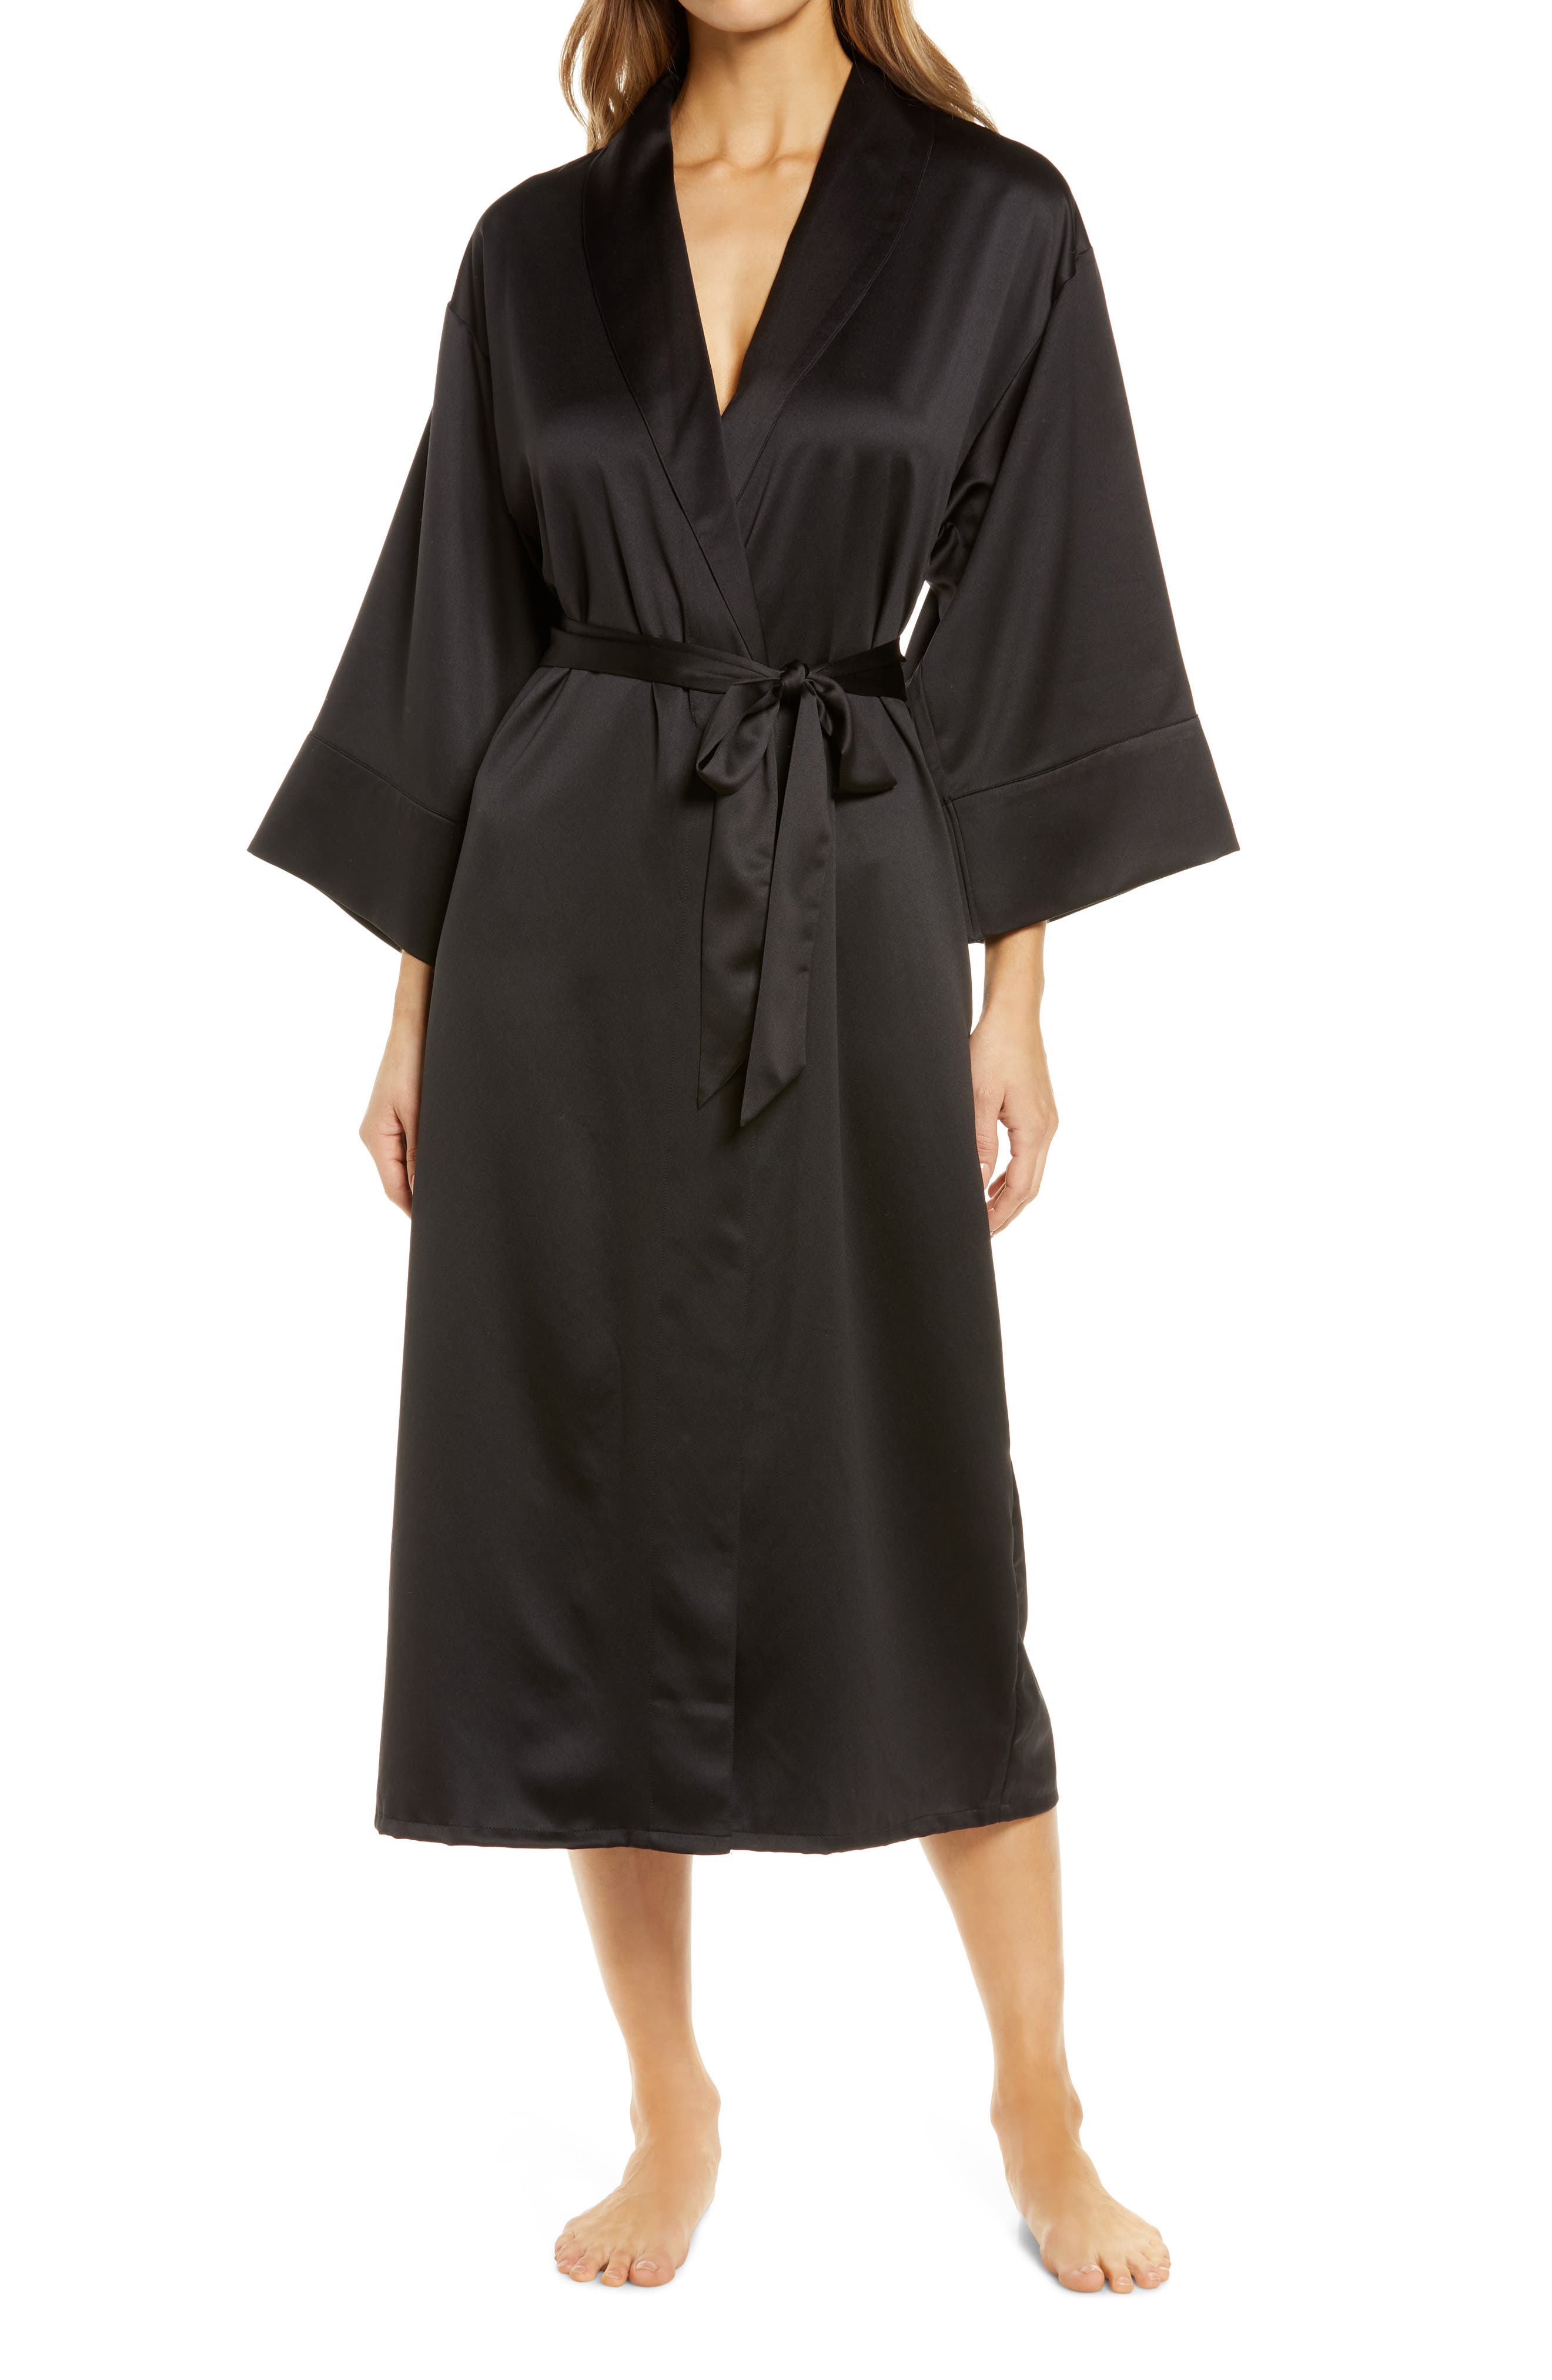 Stretch rose fuchsia jersey-dark robe fabric-free P&P